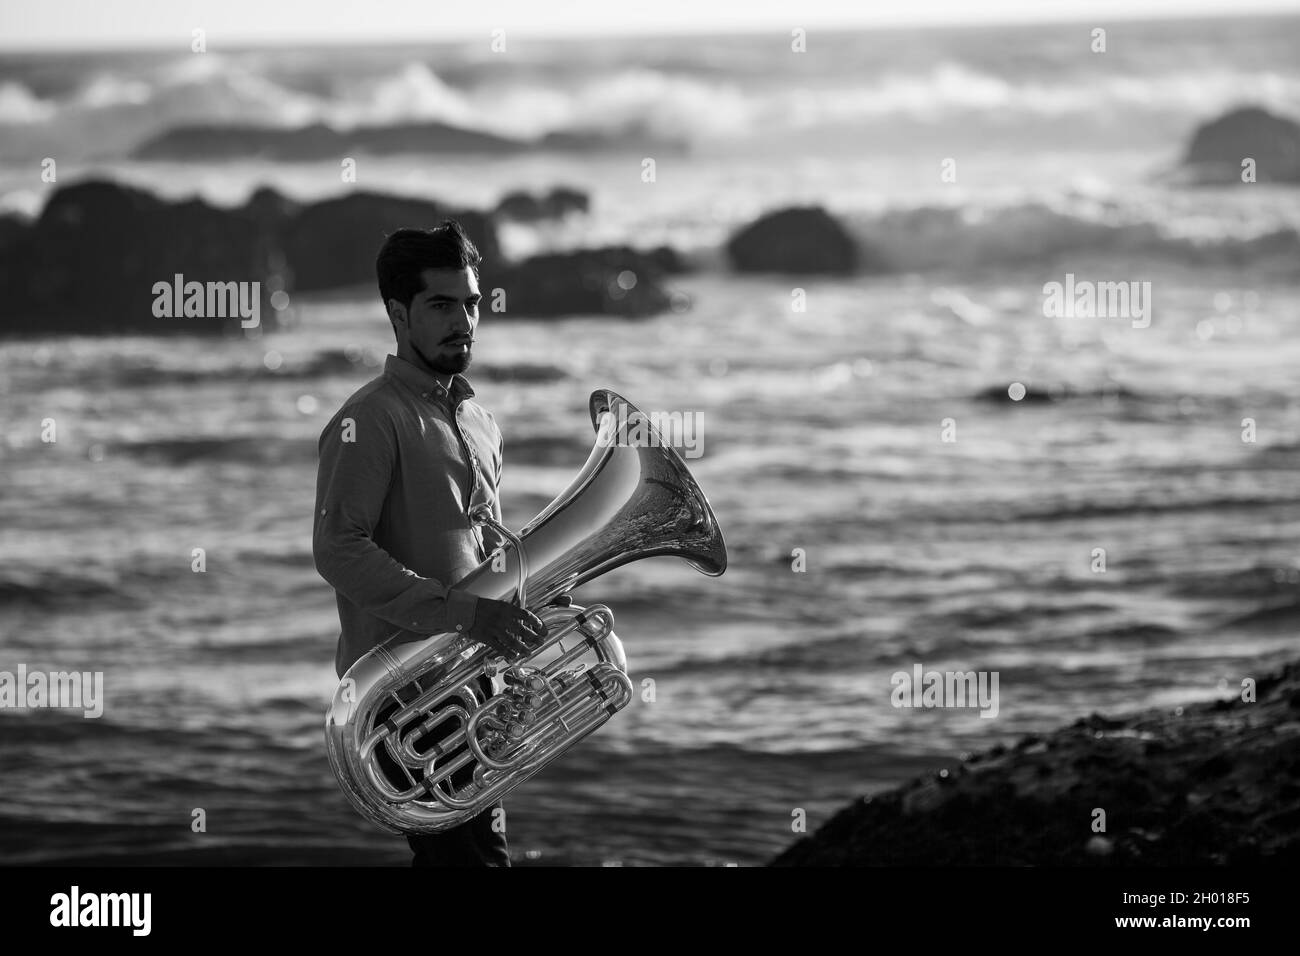 A musician man with a tuba on the Atlantic seashore. Black and white photo. Stock Photo